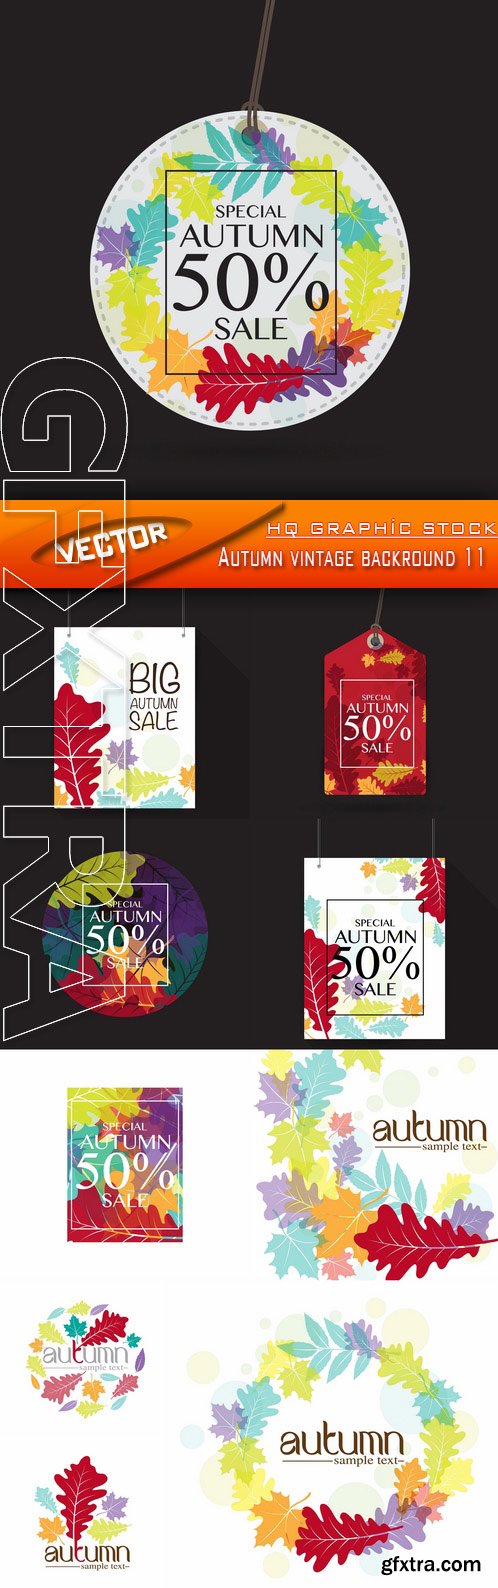 Stock Vector - Autumn vintage backround 11